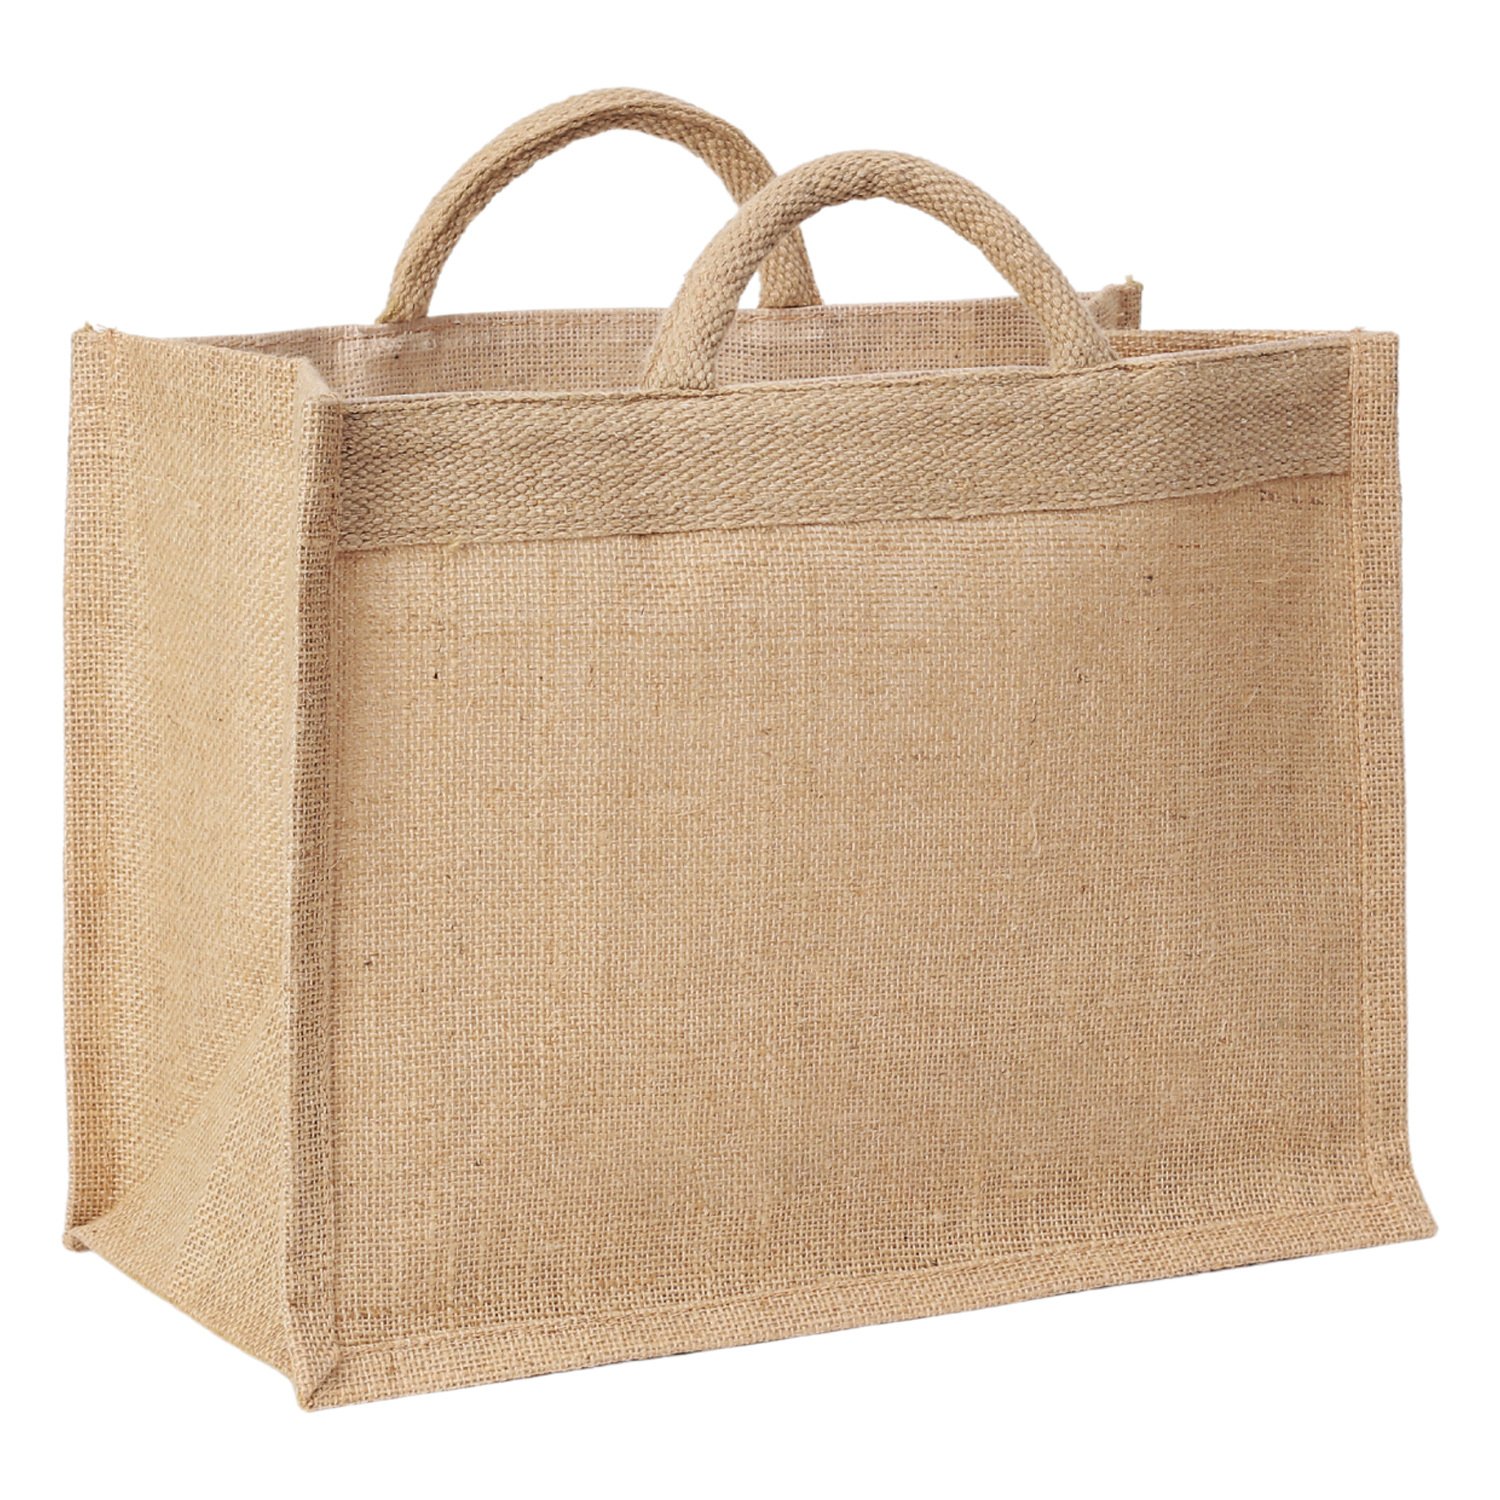 My Other Bag / Jute Bag / Shopper / Shopping Bag / Bag With -  Denmark